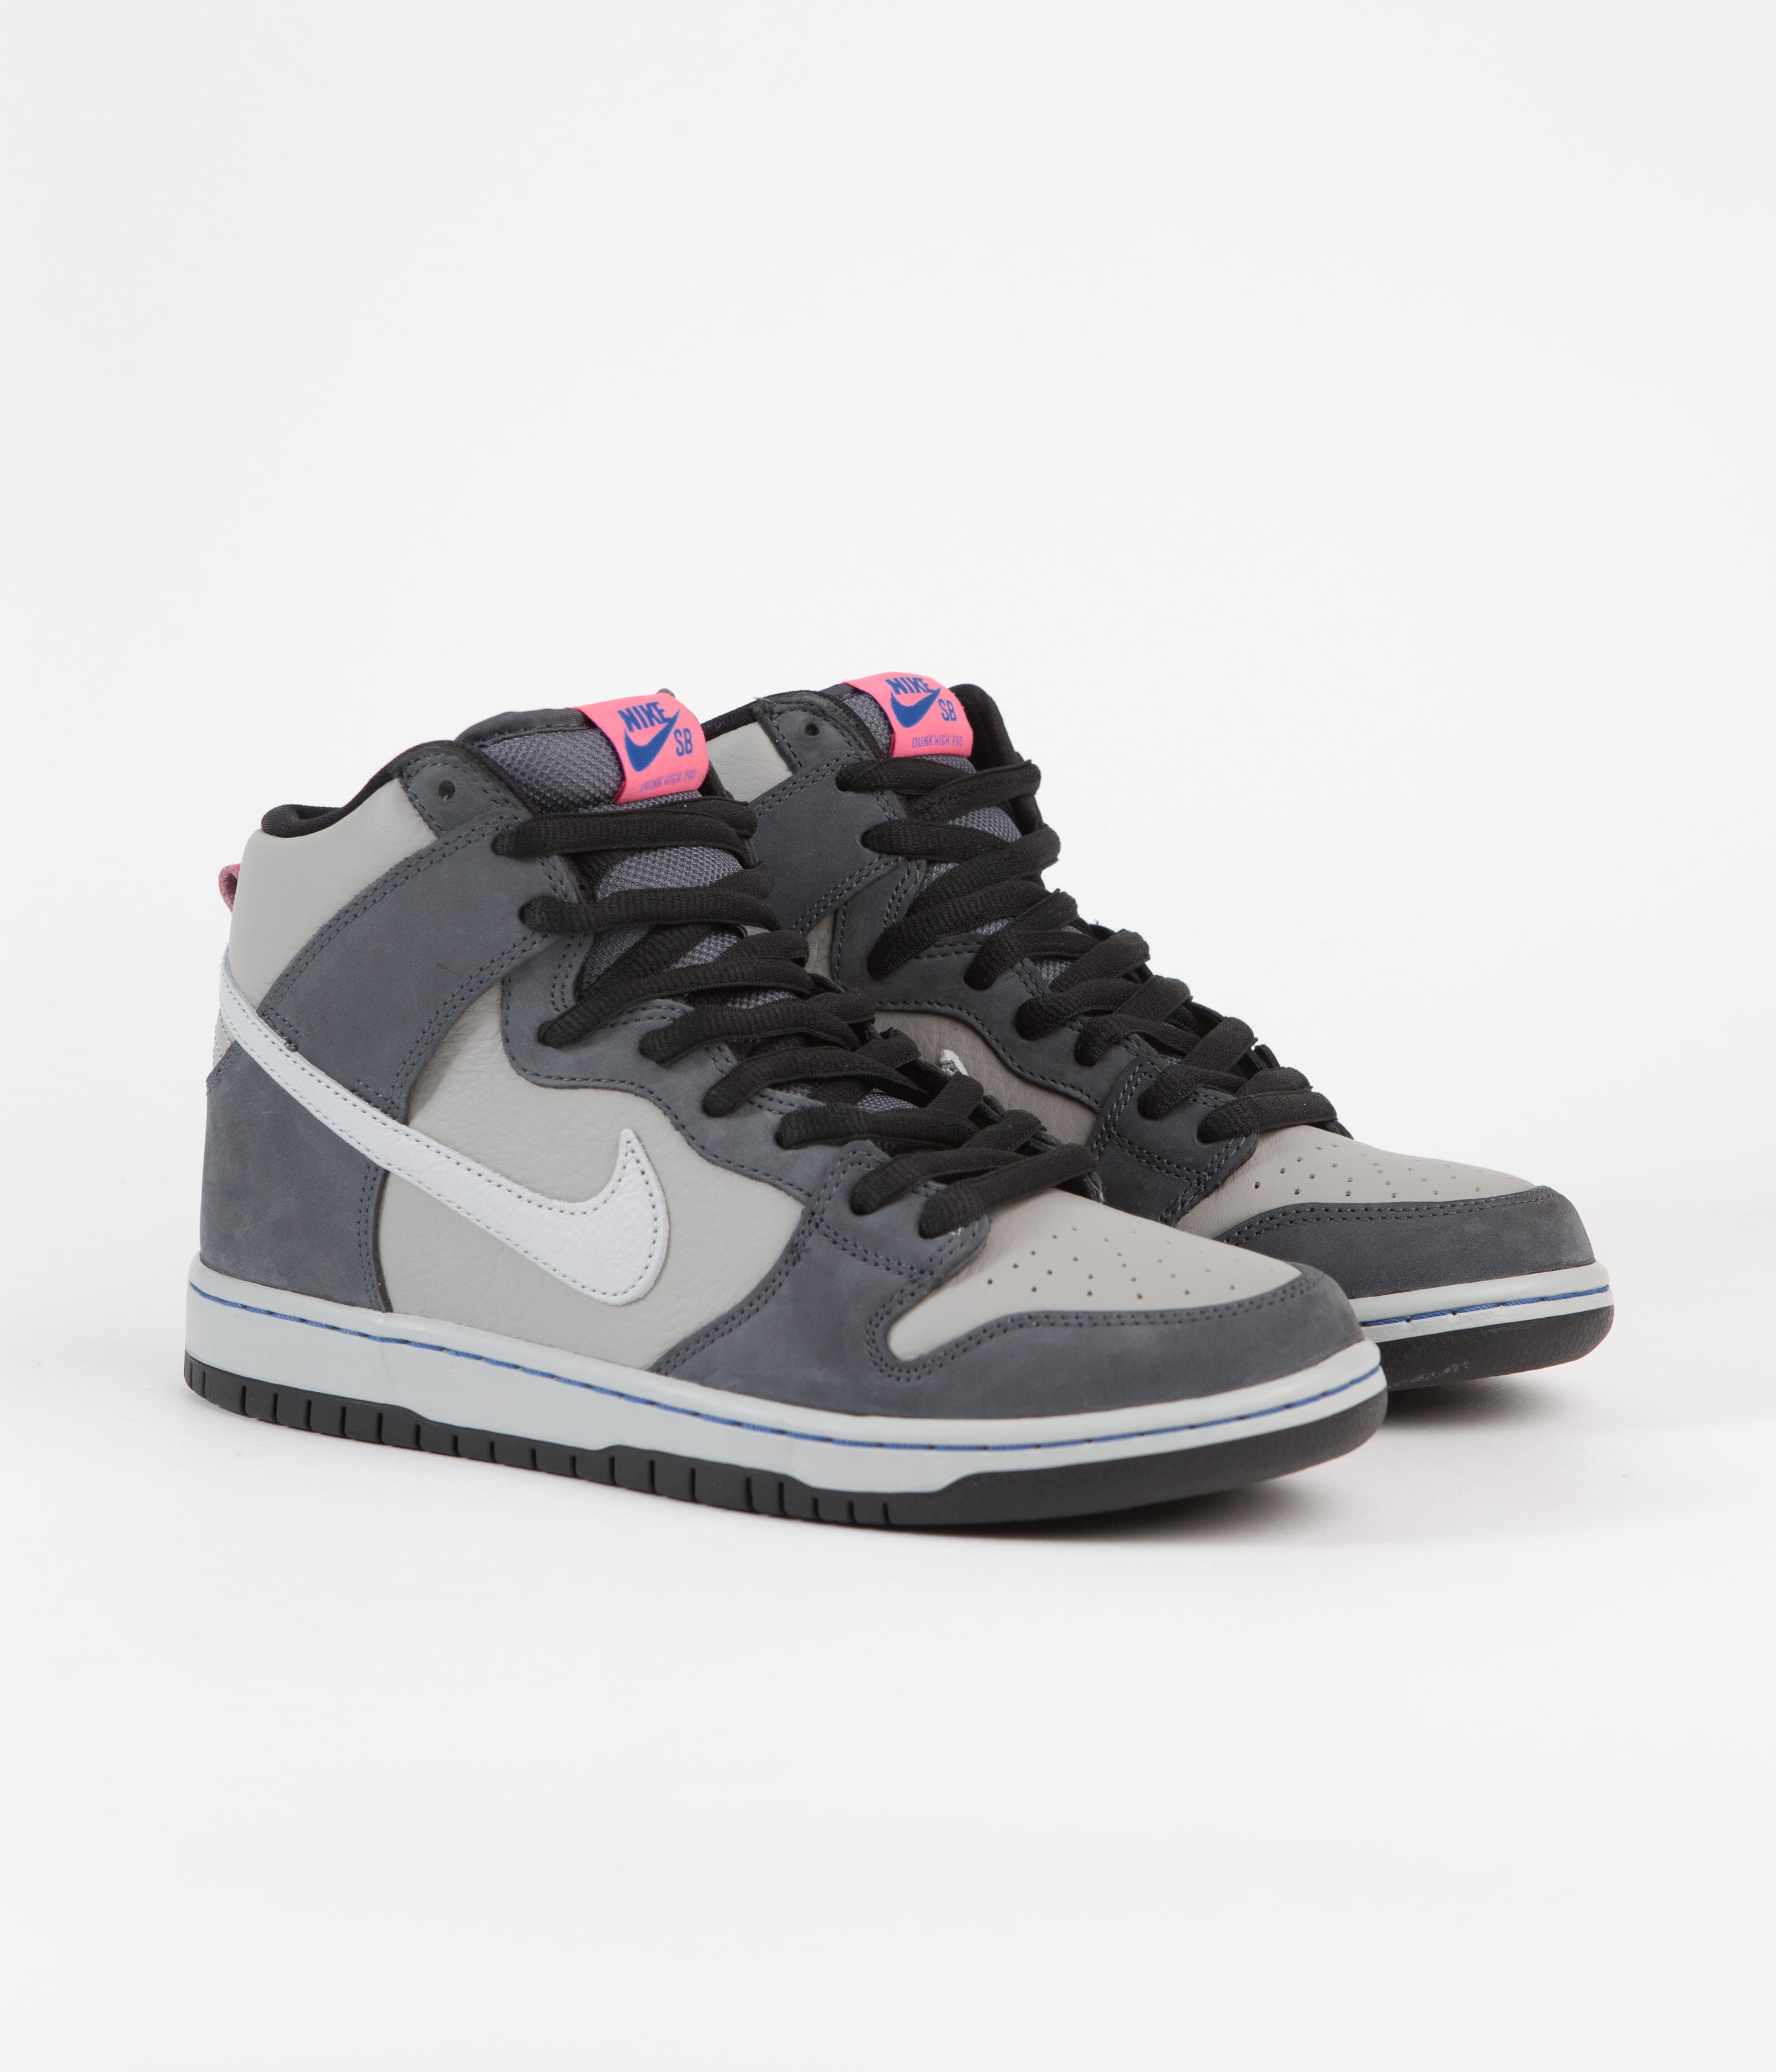 Nike SB Dunk High Pro 'ACG Superdome' Shoes   Flint Grey / Grey